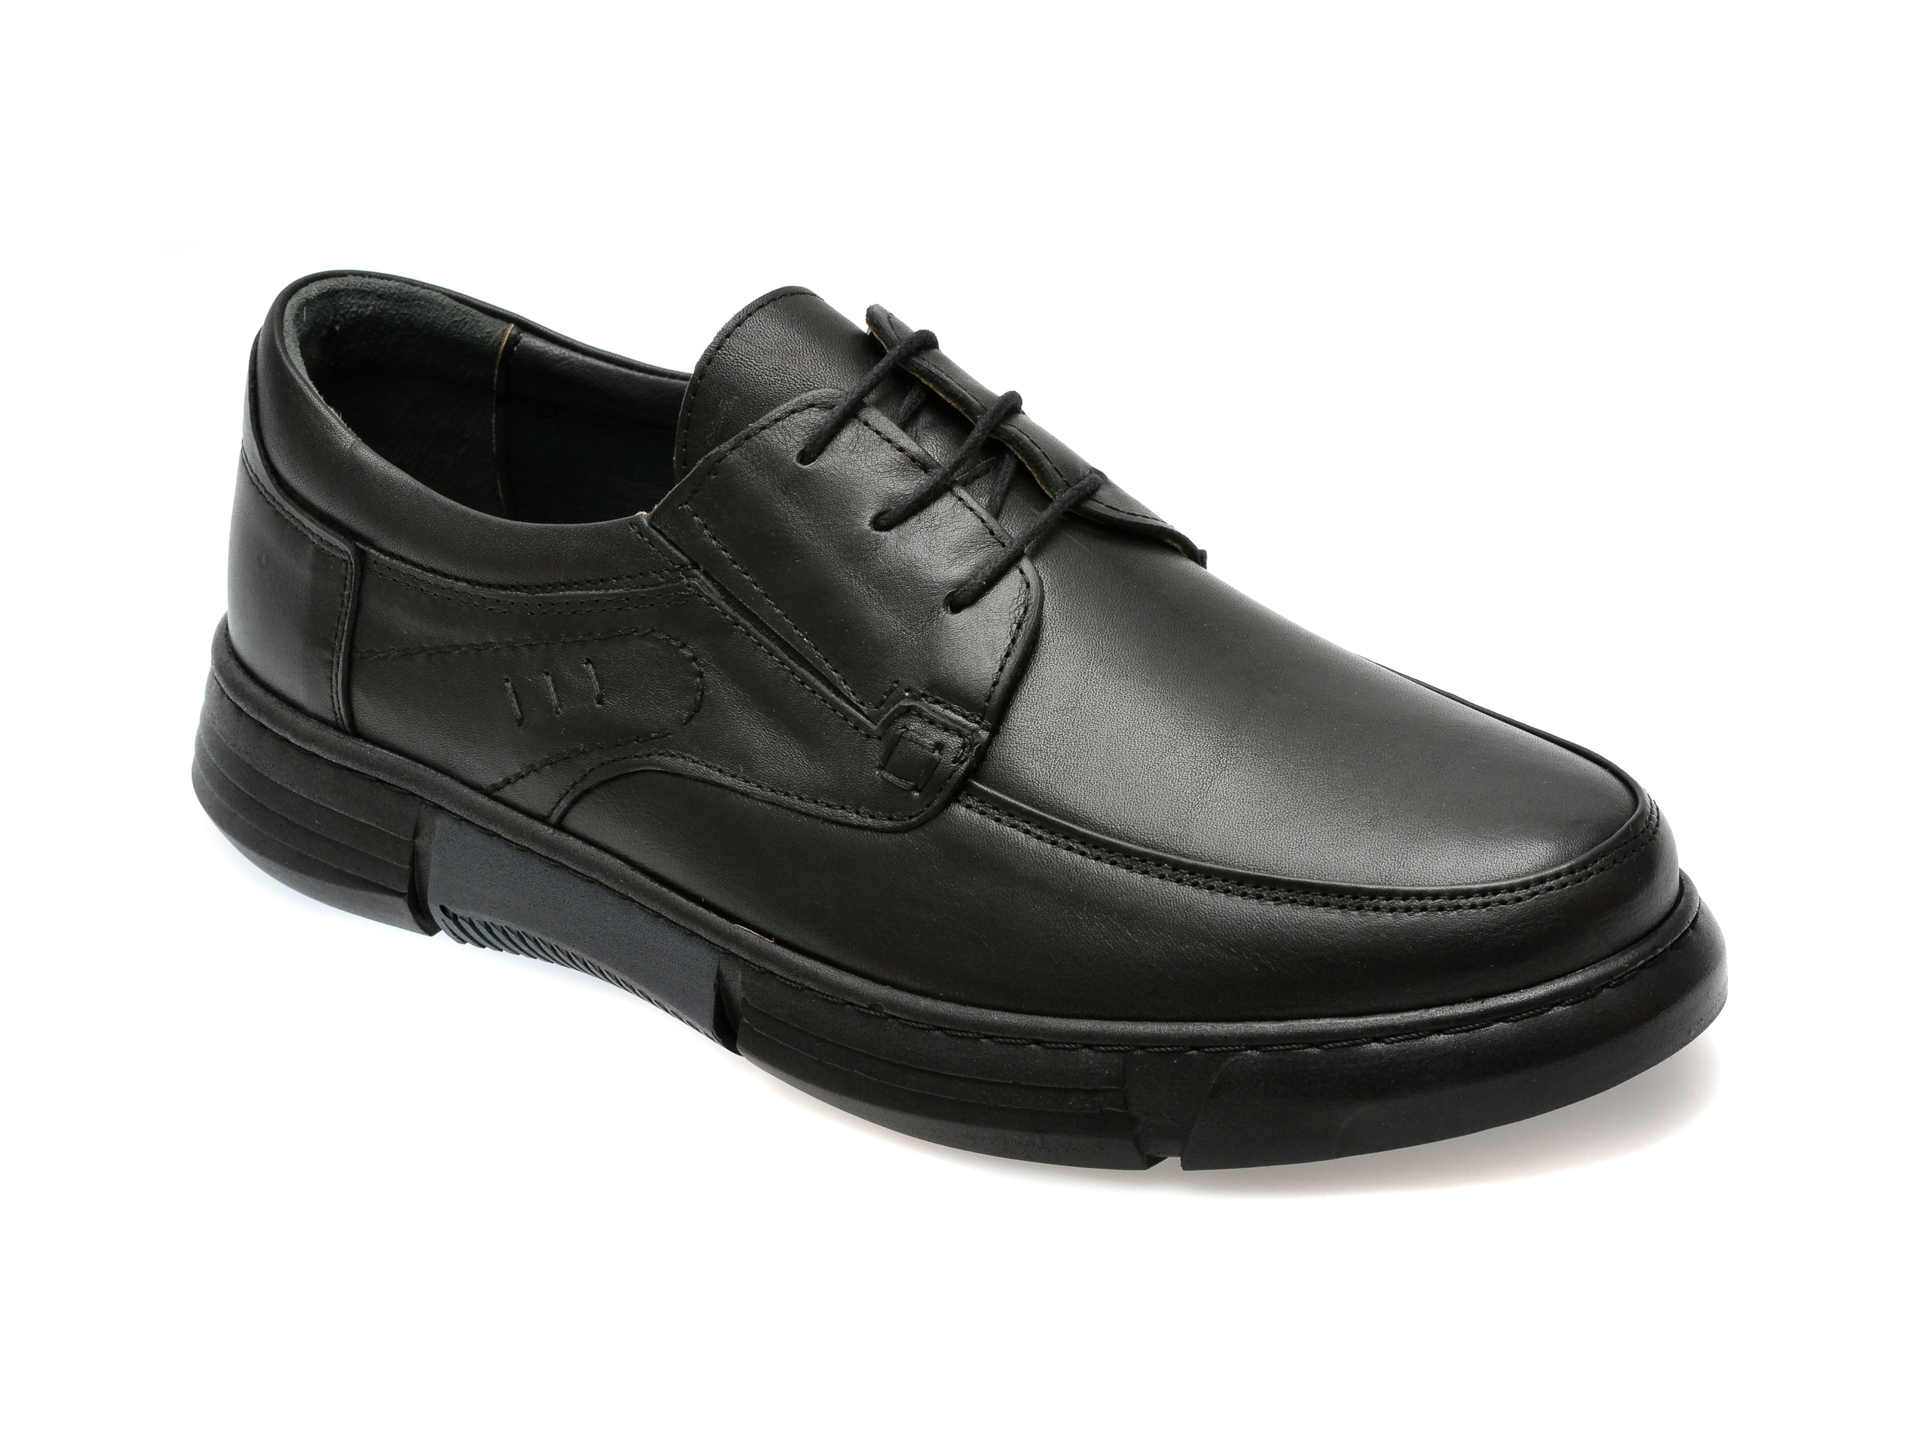 Pantofi casual OTTER negri, SH8002, din piele naturala